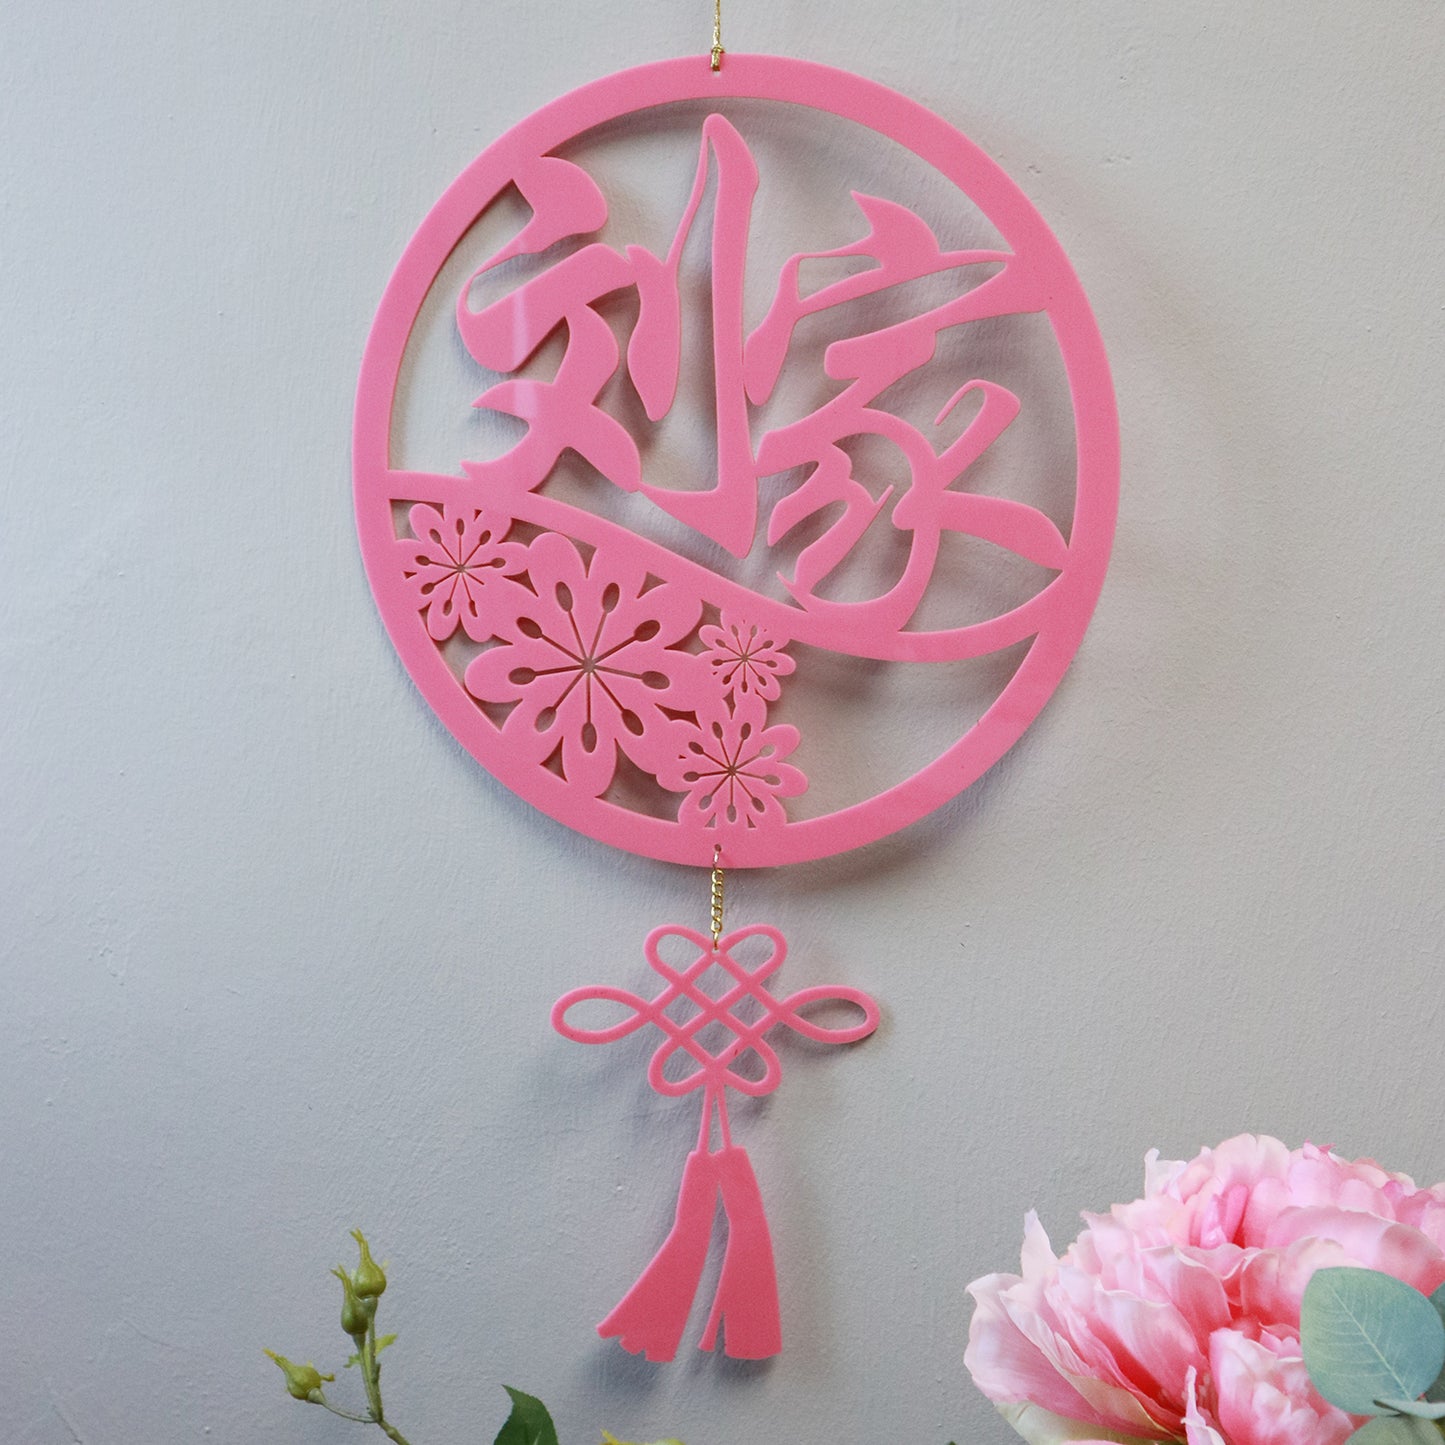 Blessings - CNY Emblem Hanging Decor